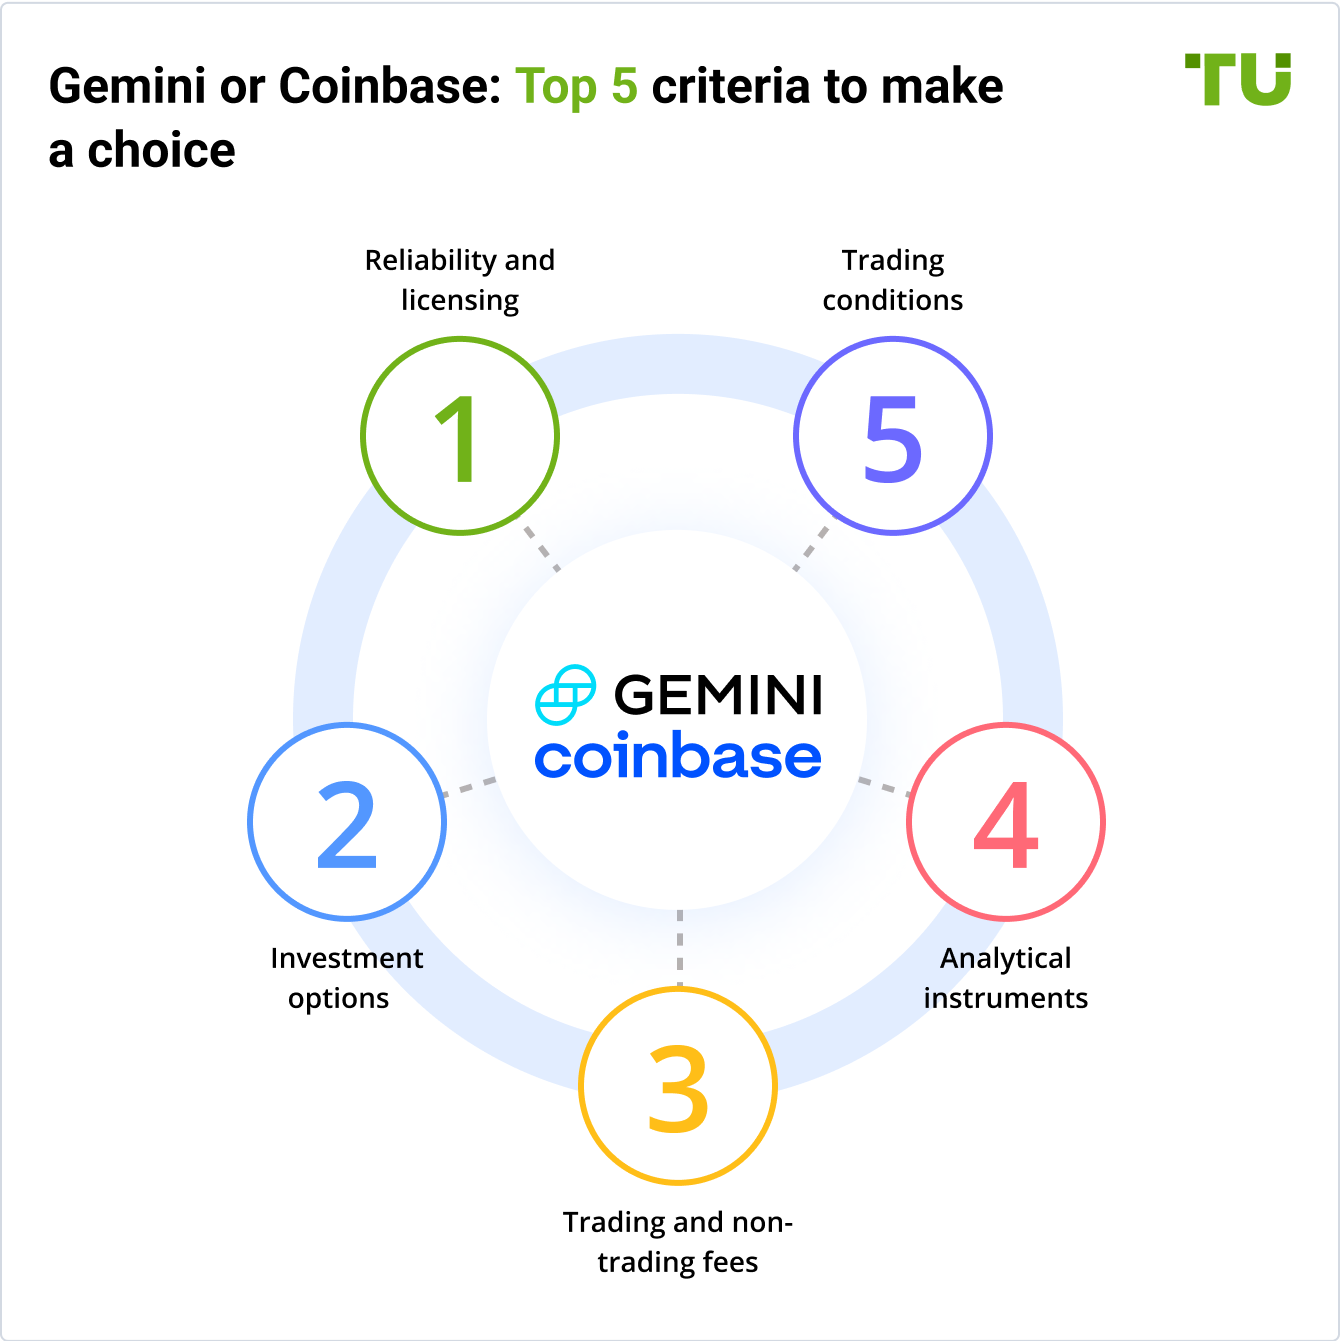 Gemini or Coinbase: Top 5 criteria to make a choice